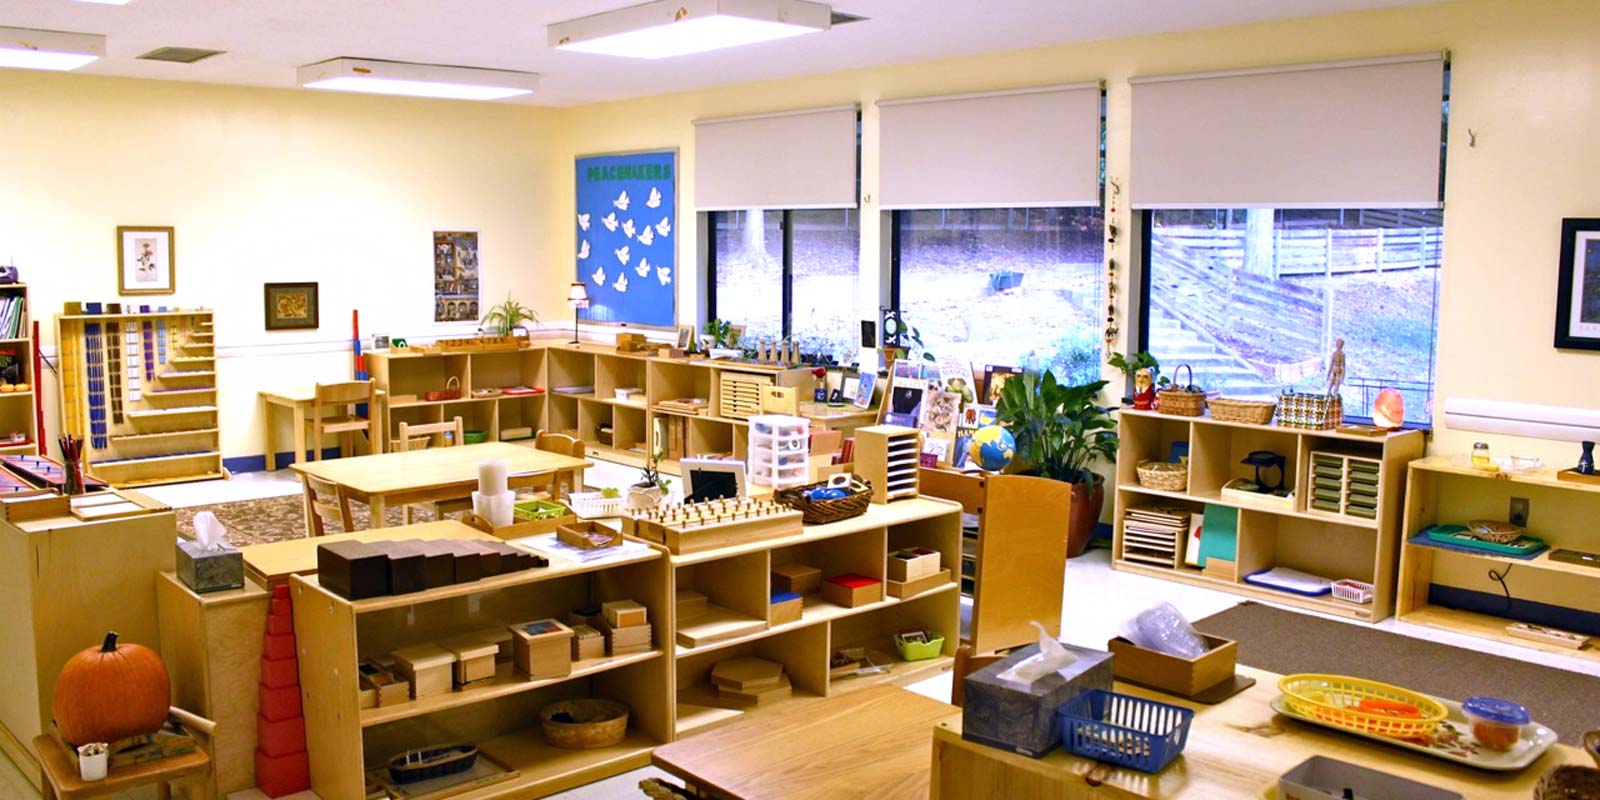 Children's Home Learning Center Renaissance Montessori | Raleigh NC (pic: reniassancescholars.com)